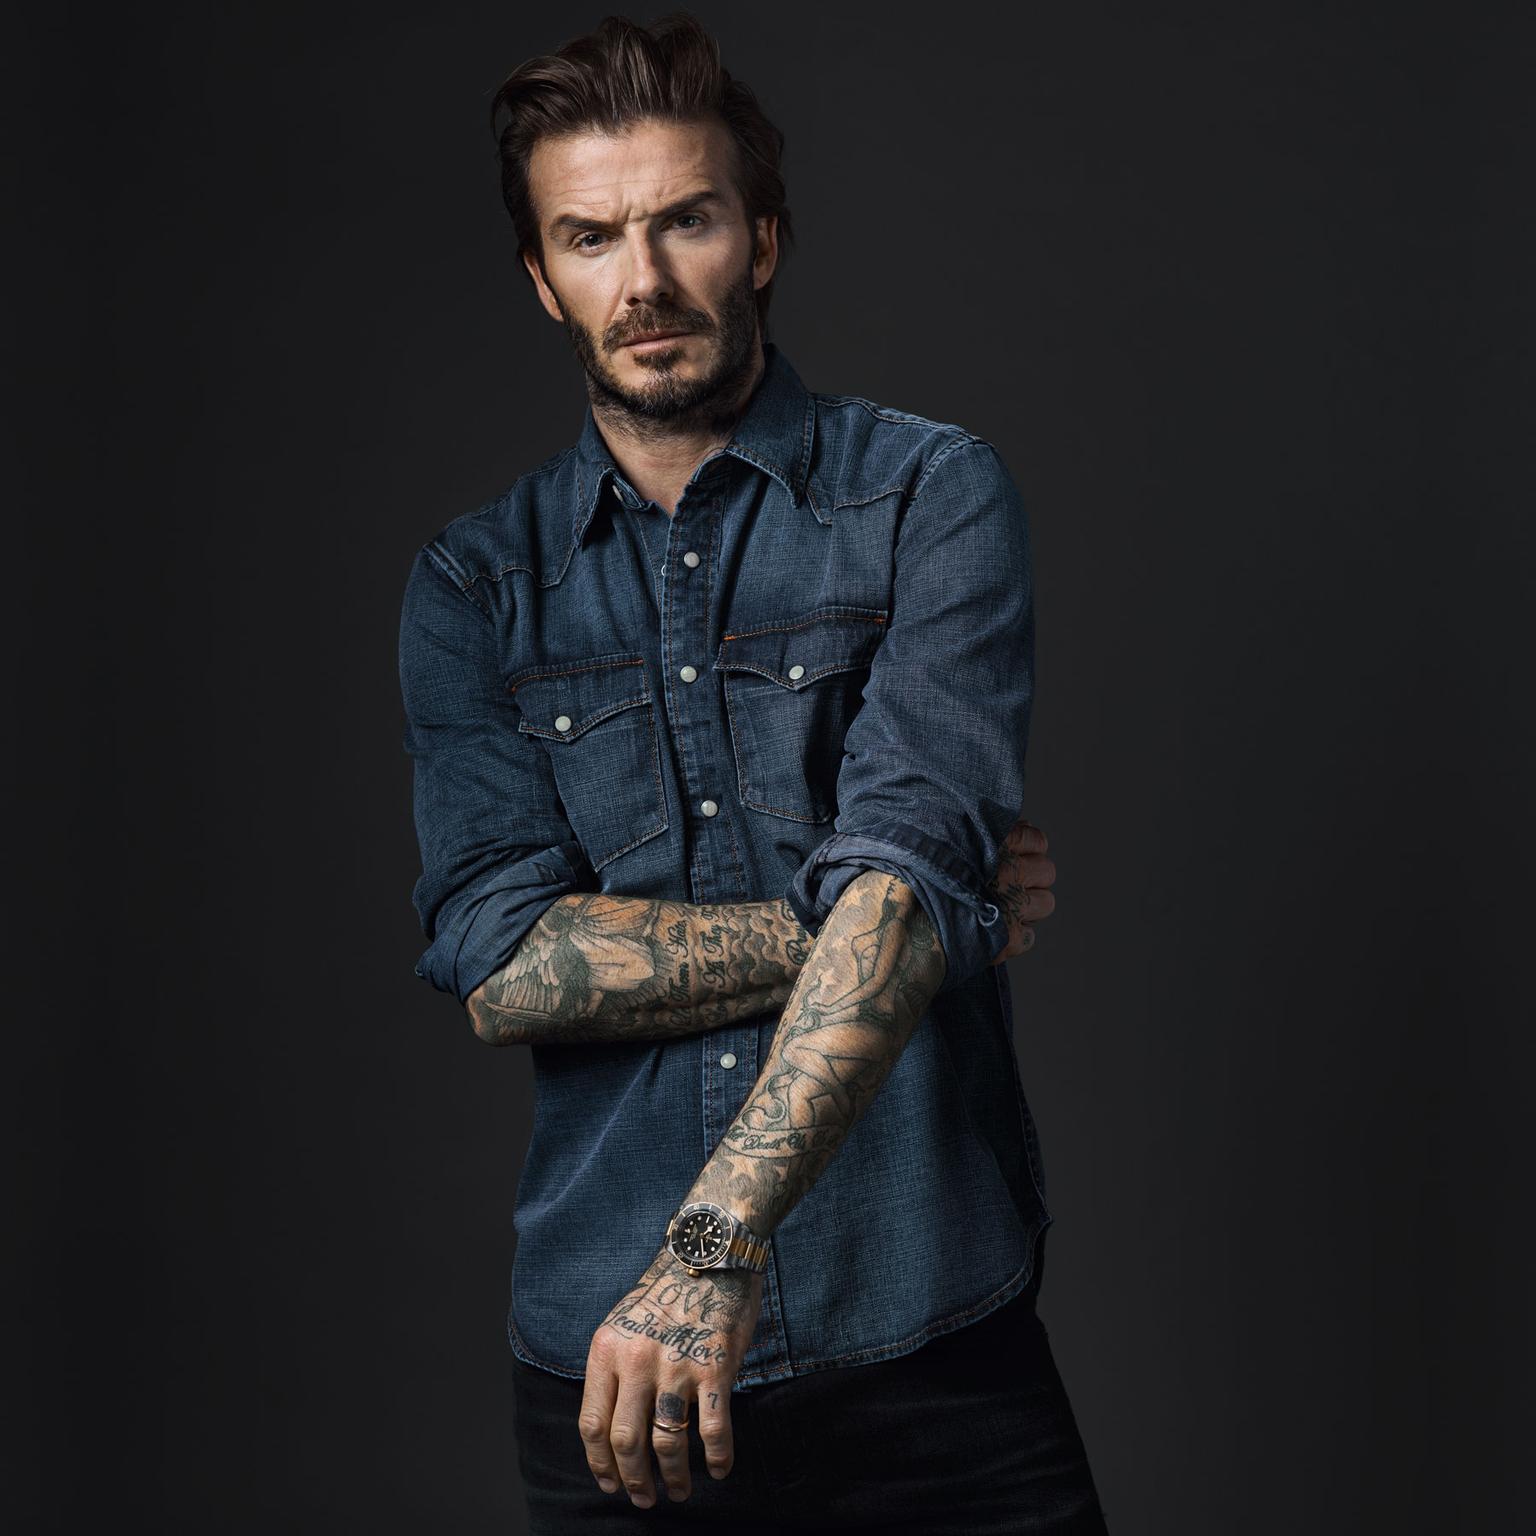 Tudor Born to Dare watch campaign featuring David Beckham in a denim shirt